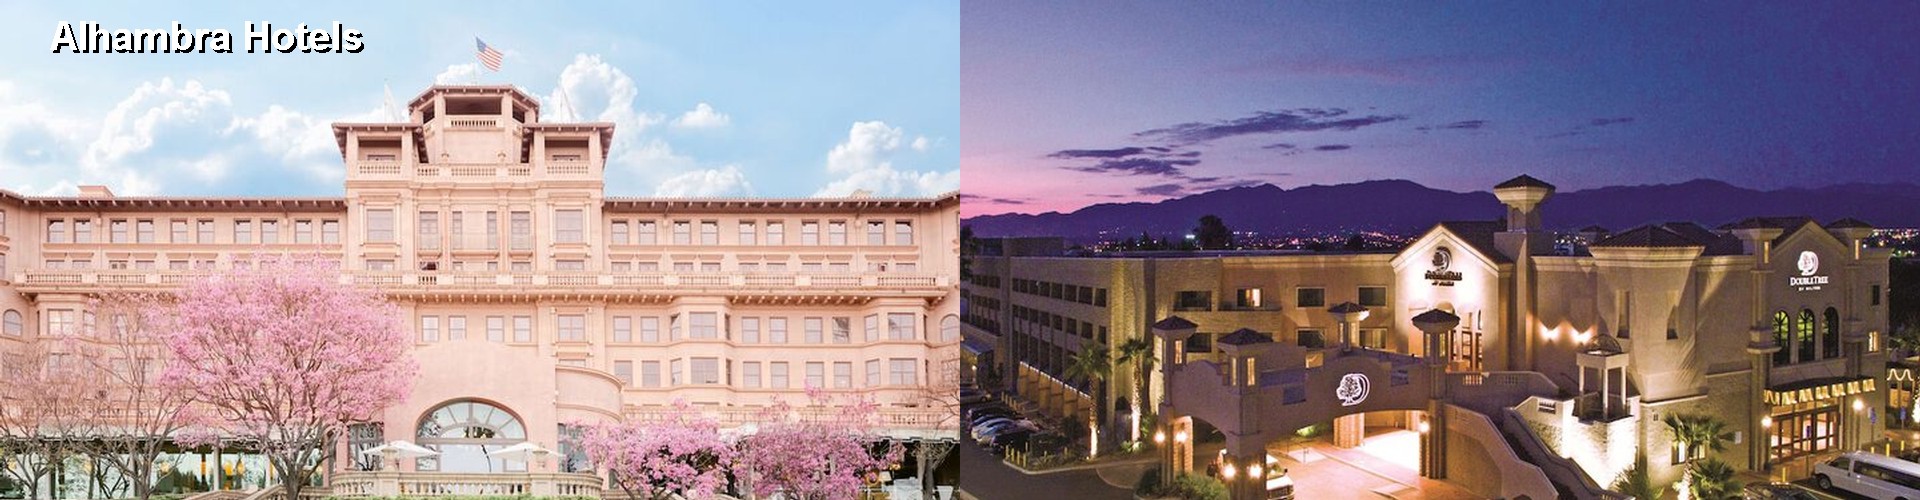 5 Best Hotels near Alhambra